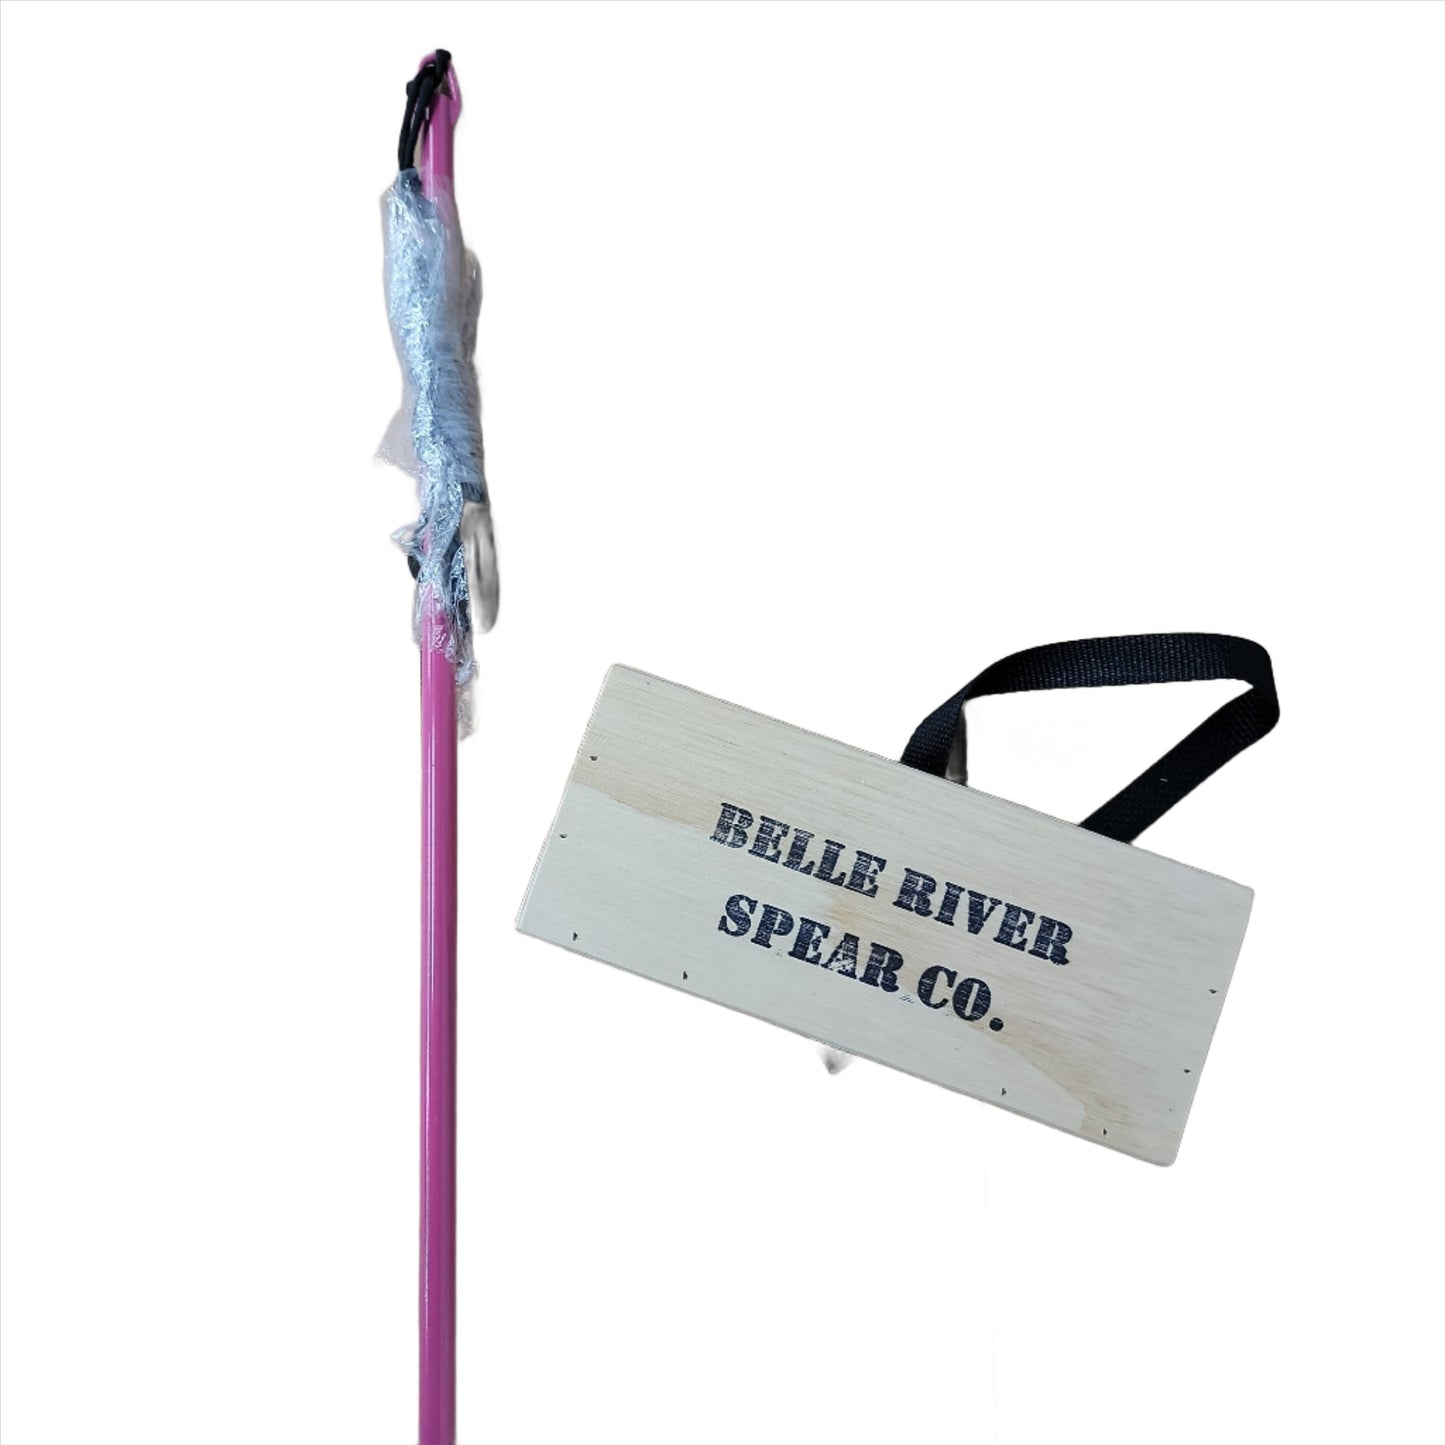 Belle River 7 Tine Spear